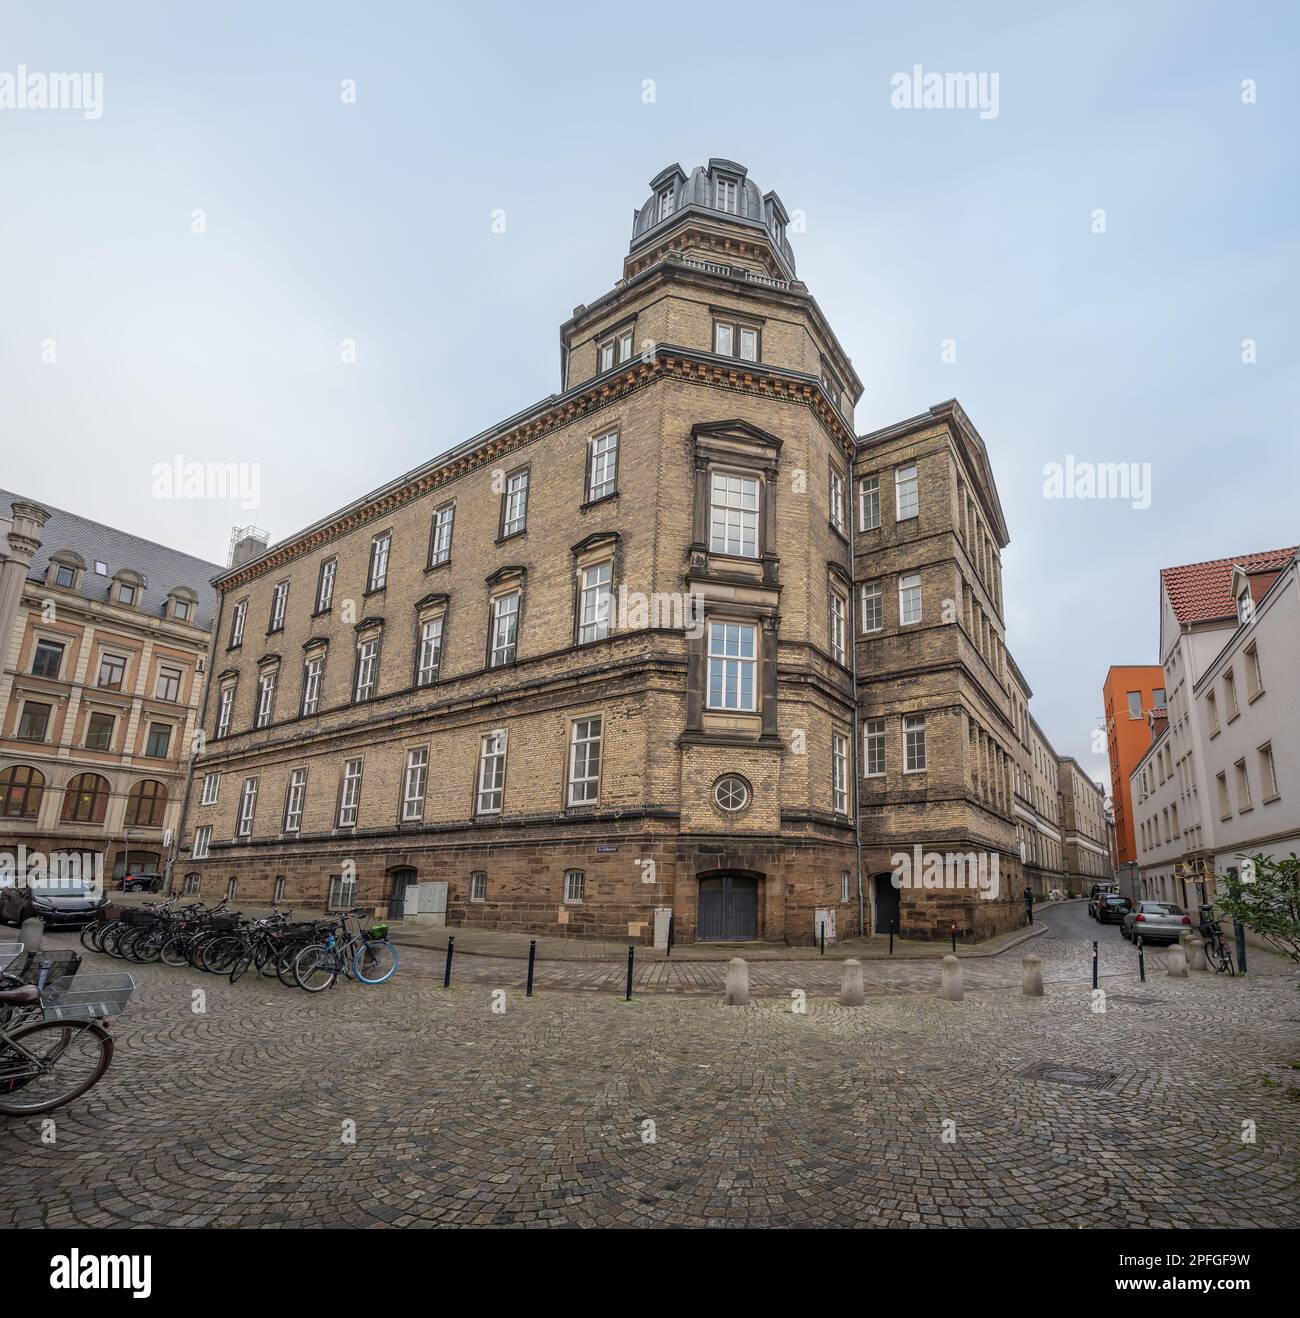 University of Arts (HfK Bremen) at Schnoor quarter - Bremen, Germany Stock Photo